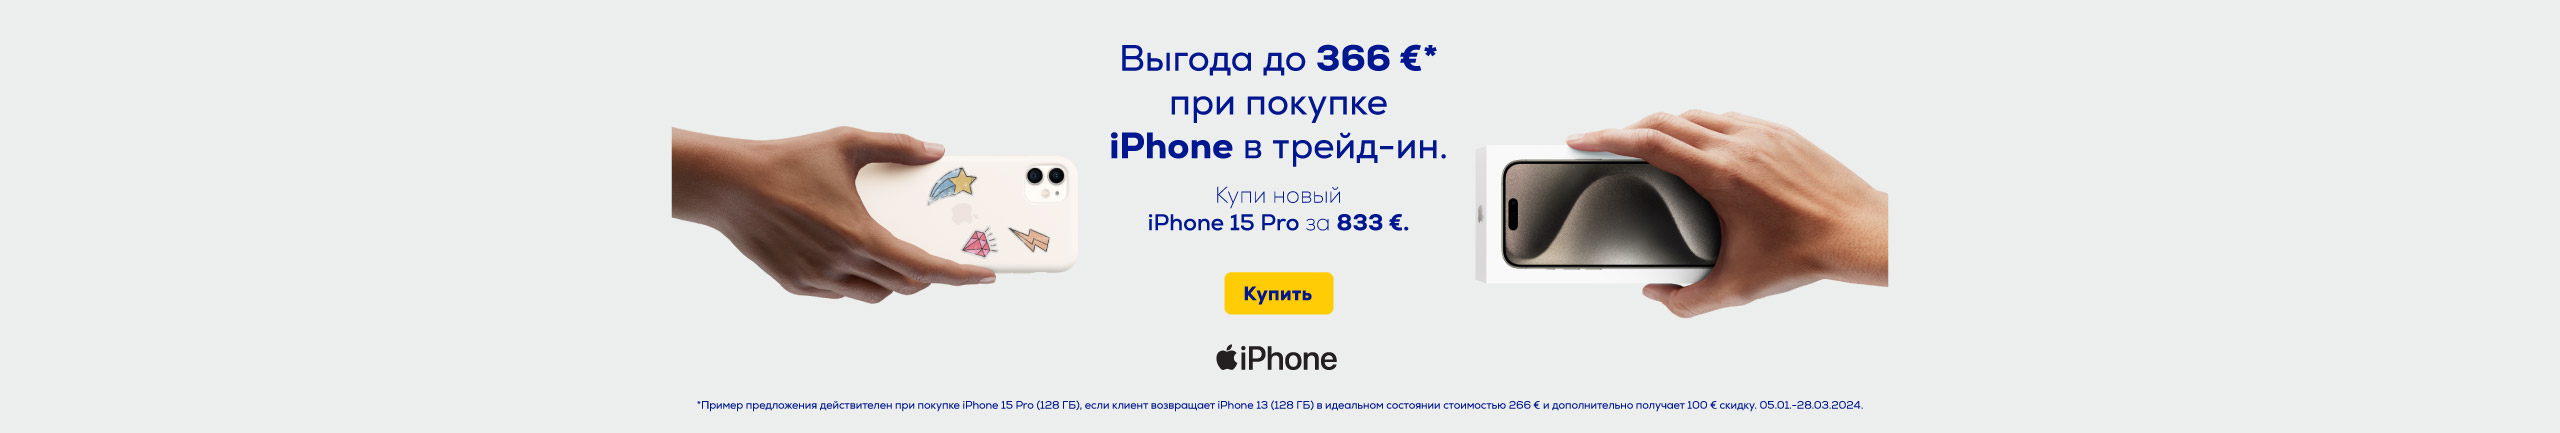 GR iPhone trade